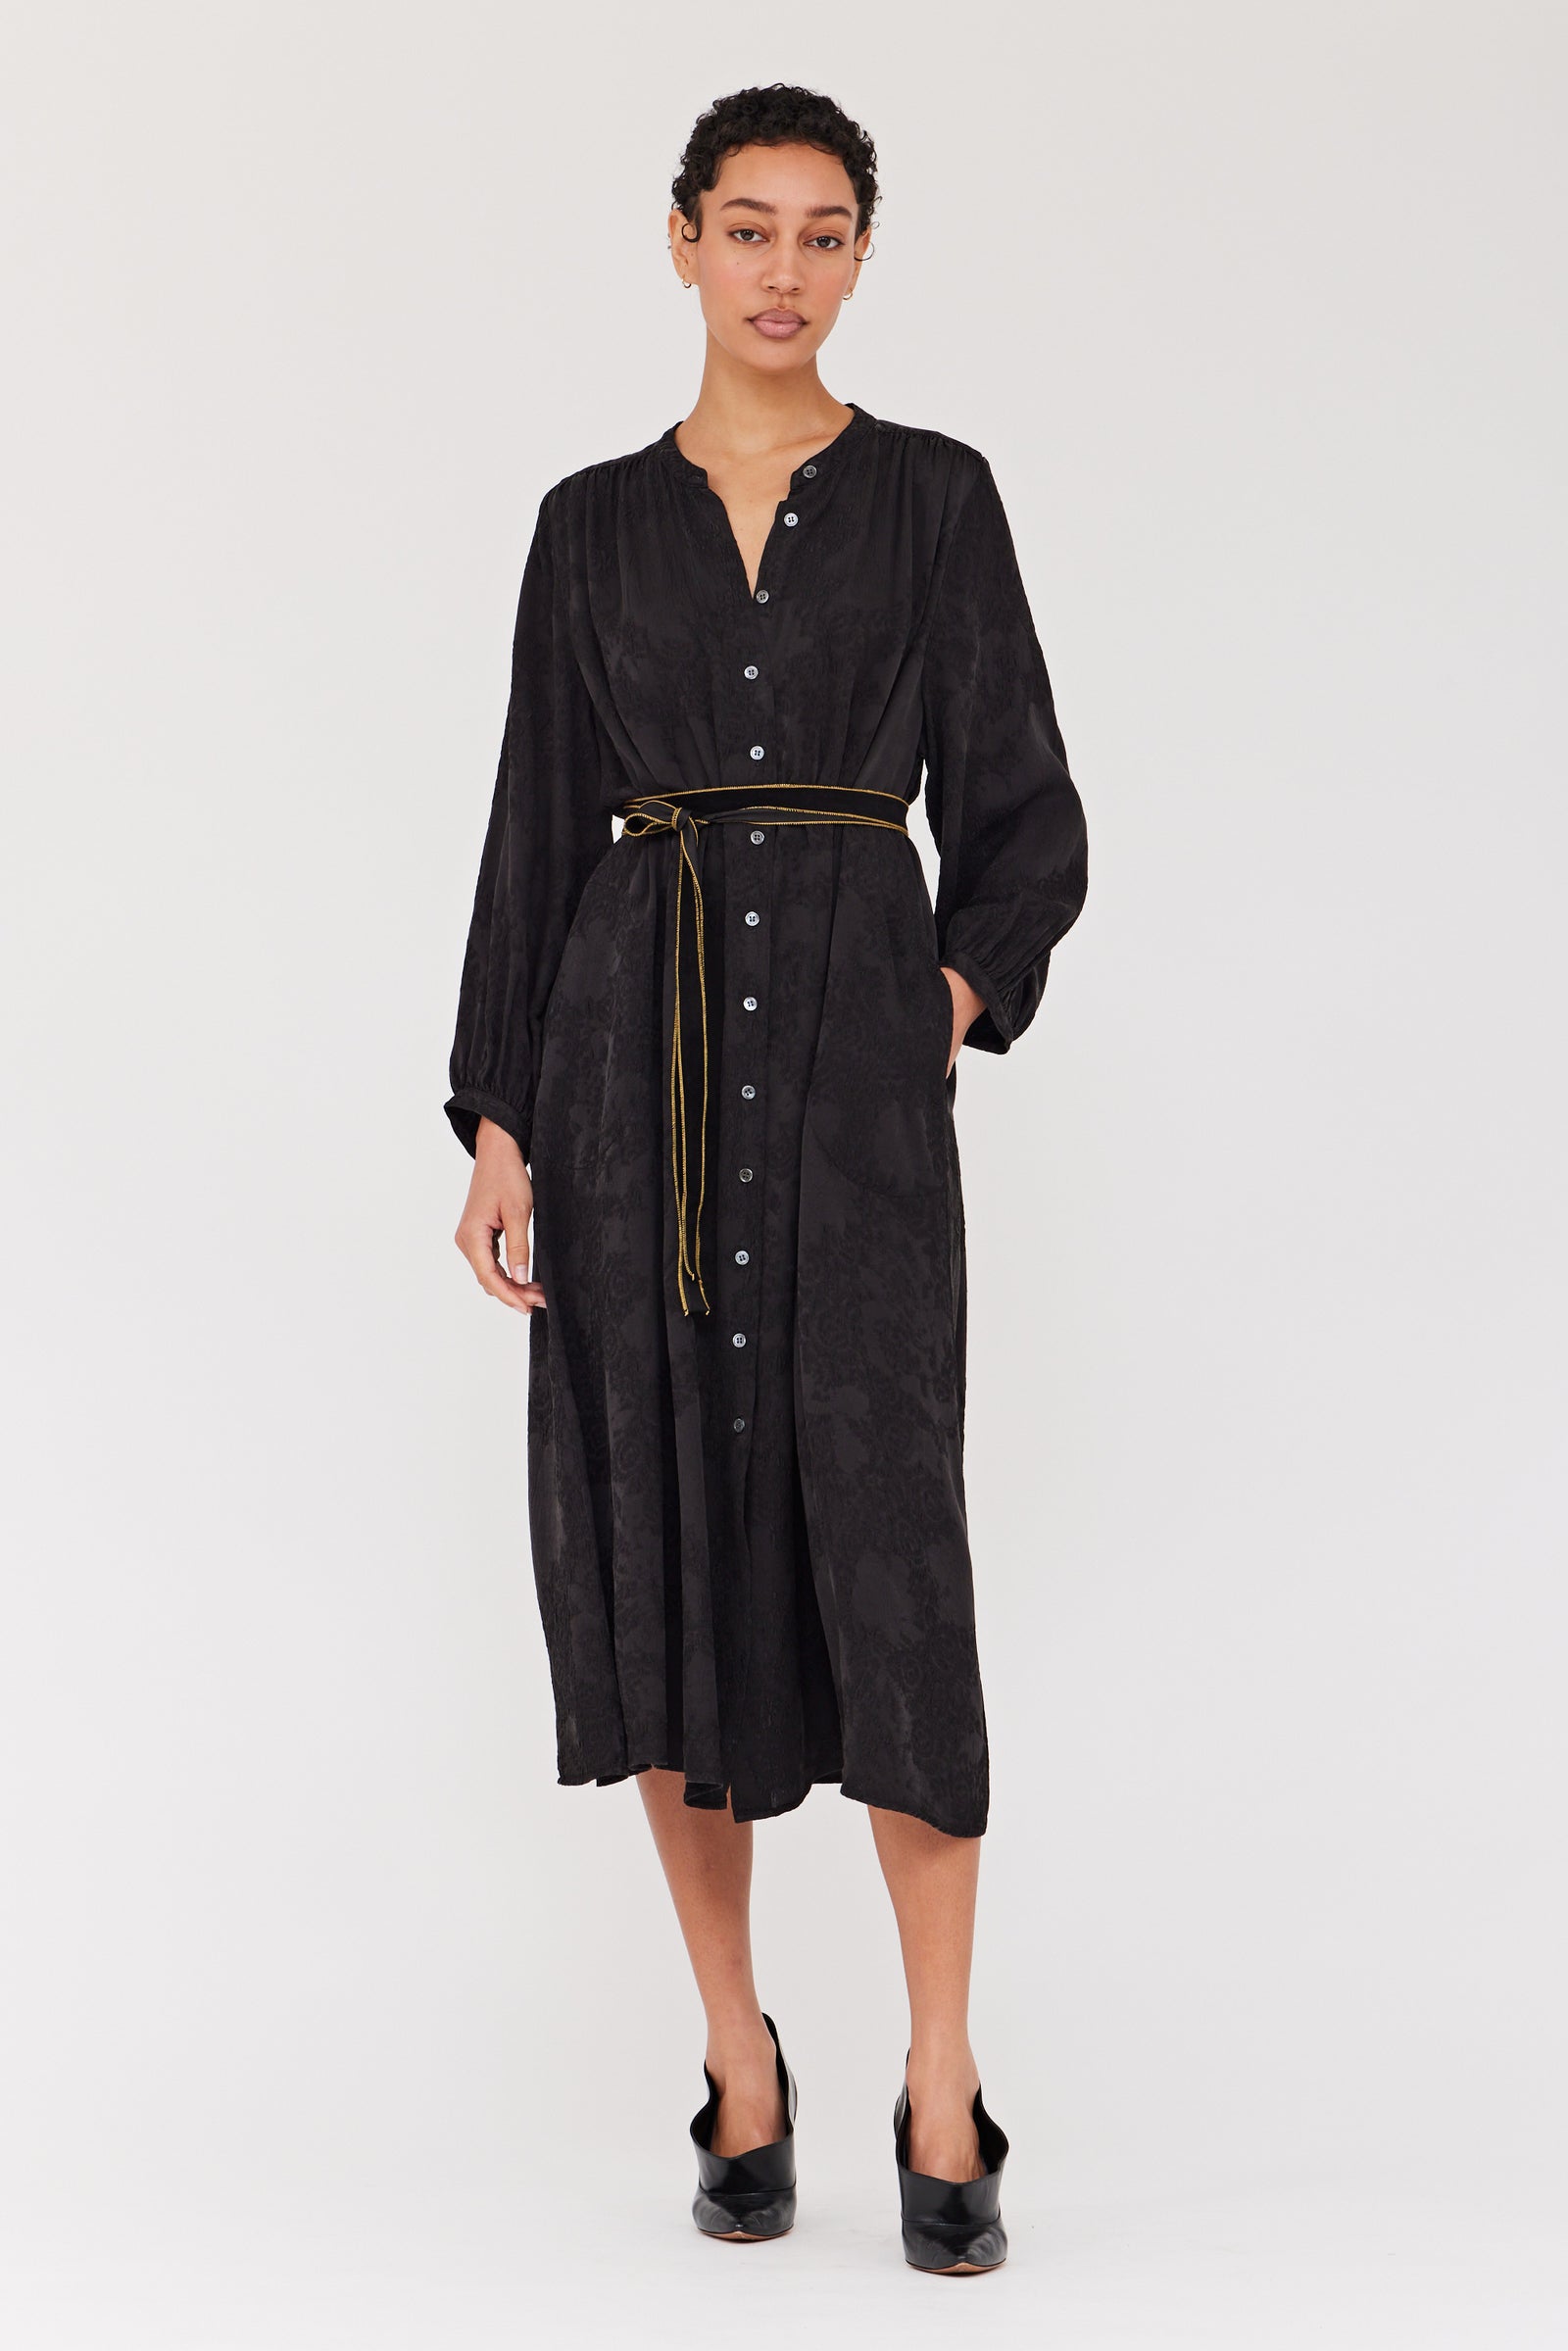 Ankle Length Midi Dress - Buy Black Rayon Midi Dress Online